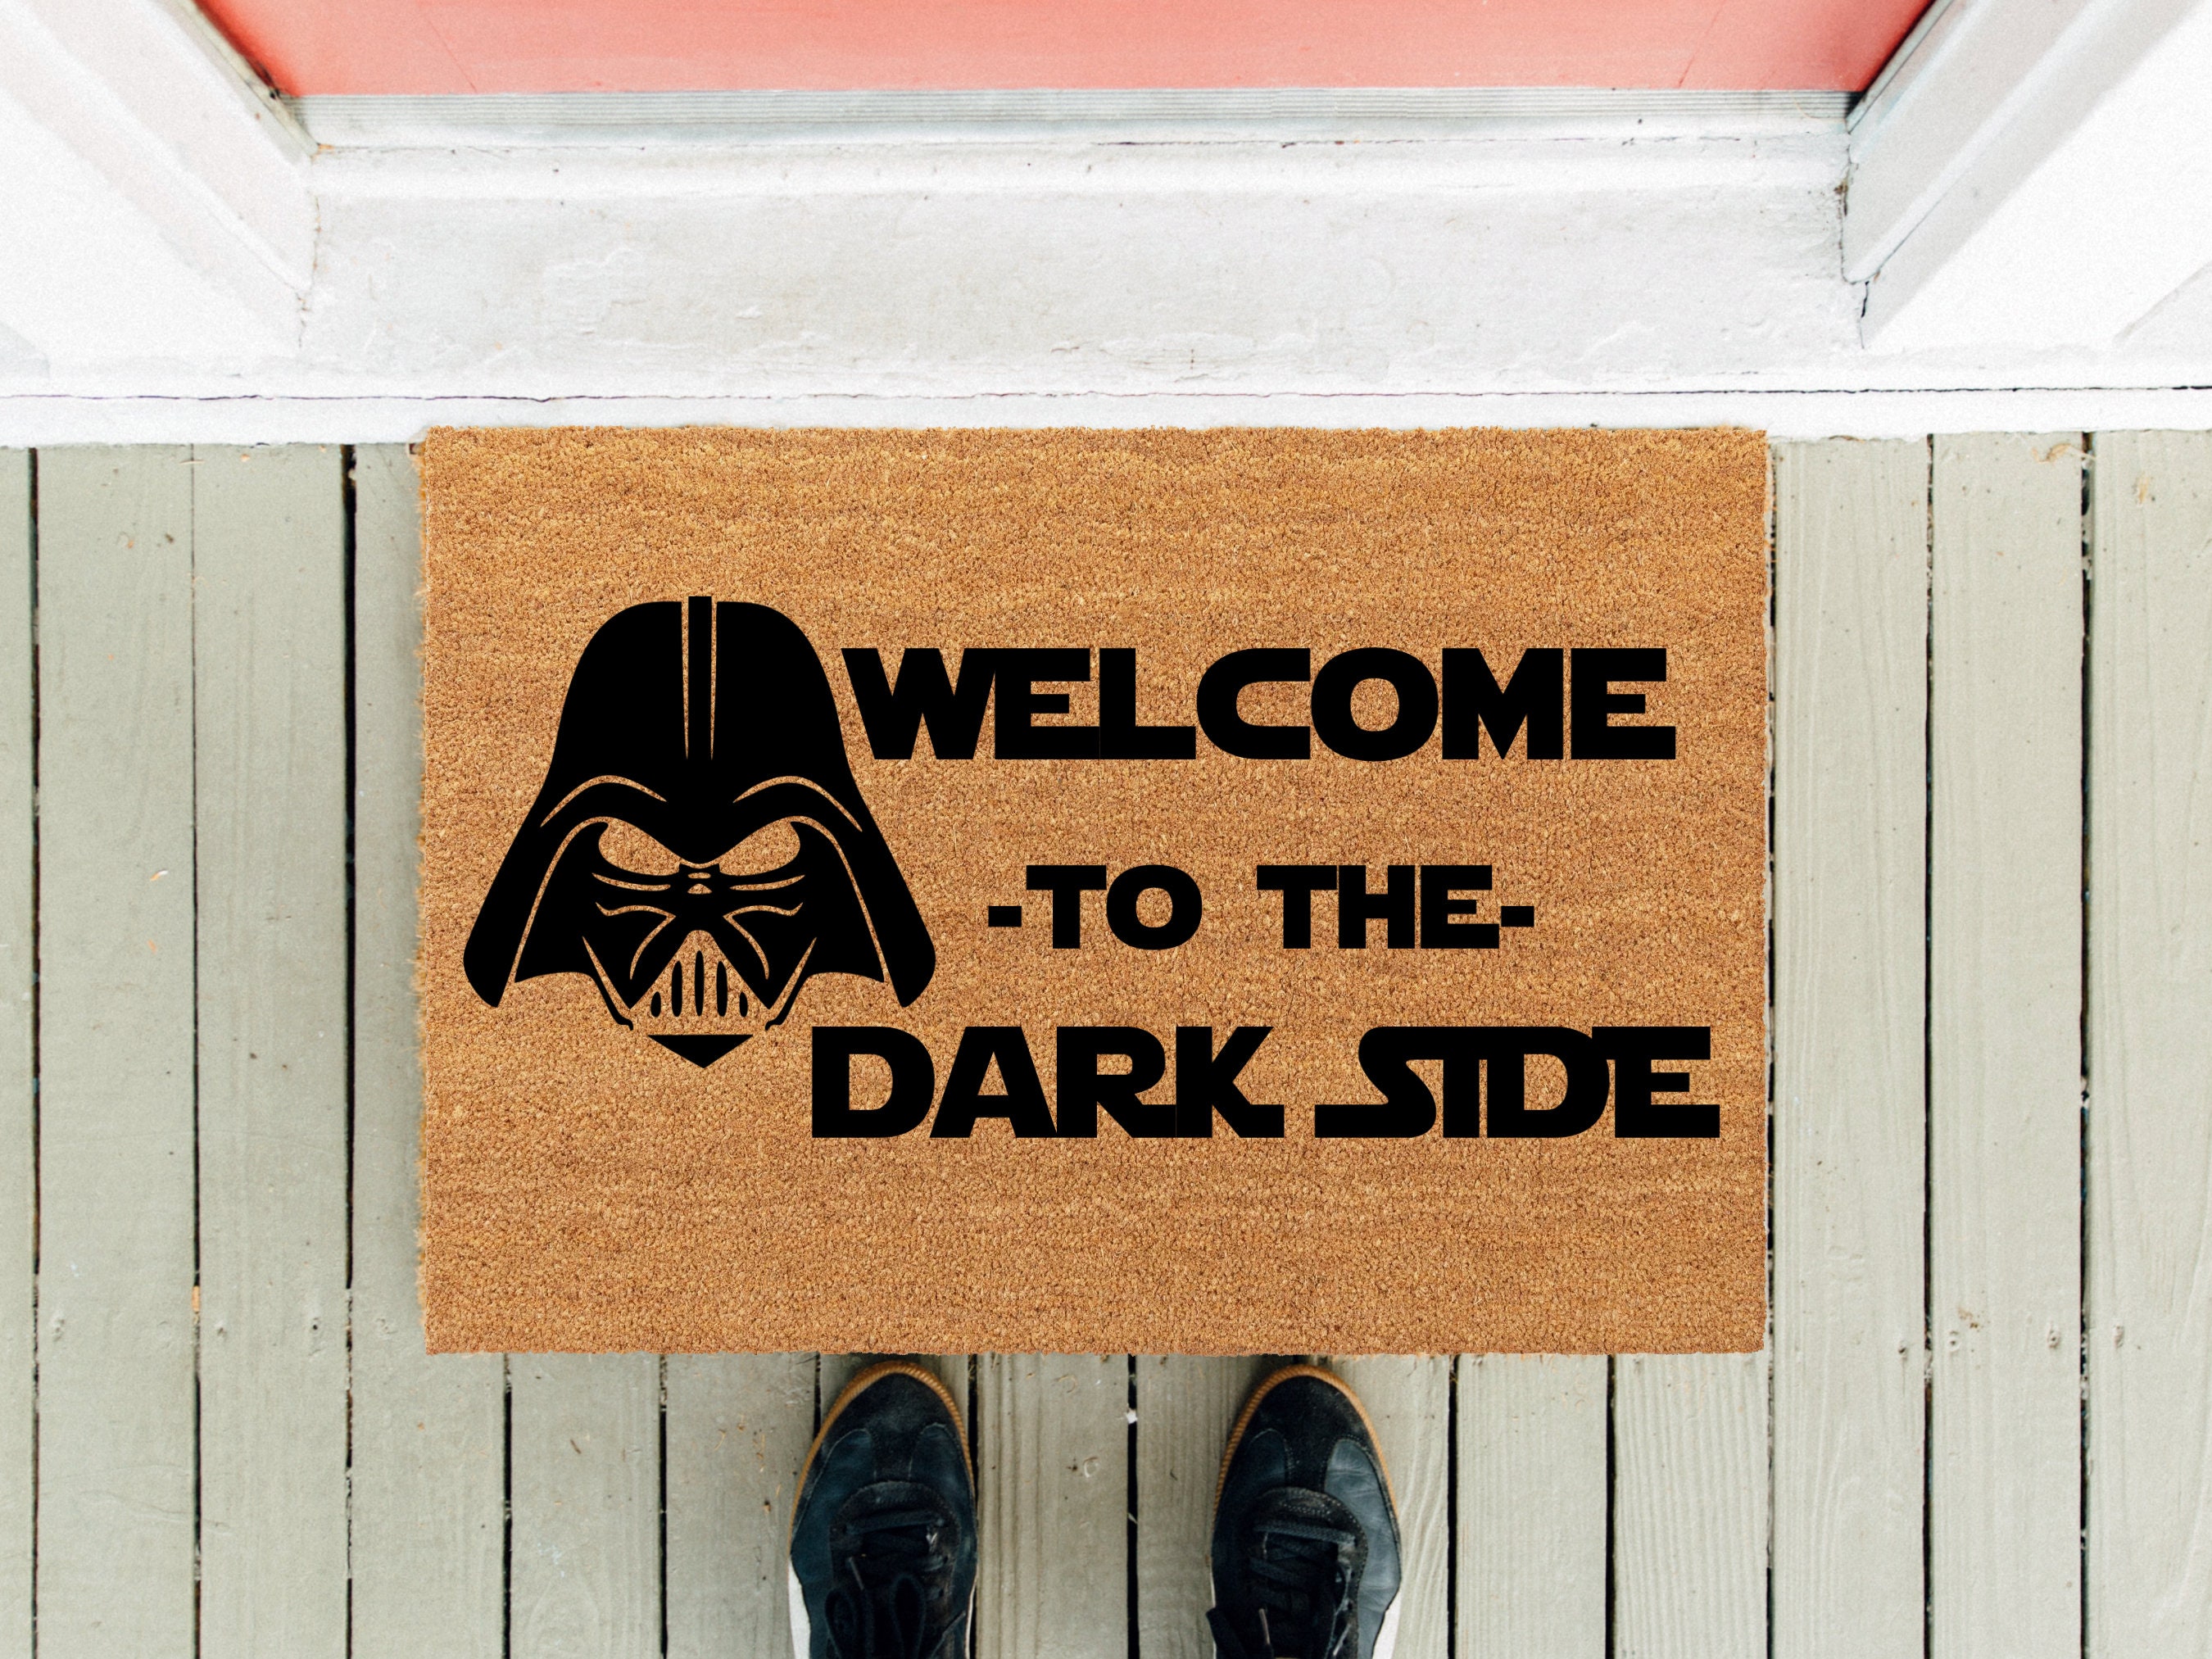 Felpudo Star Wars: Welcome To The Dark Side